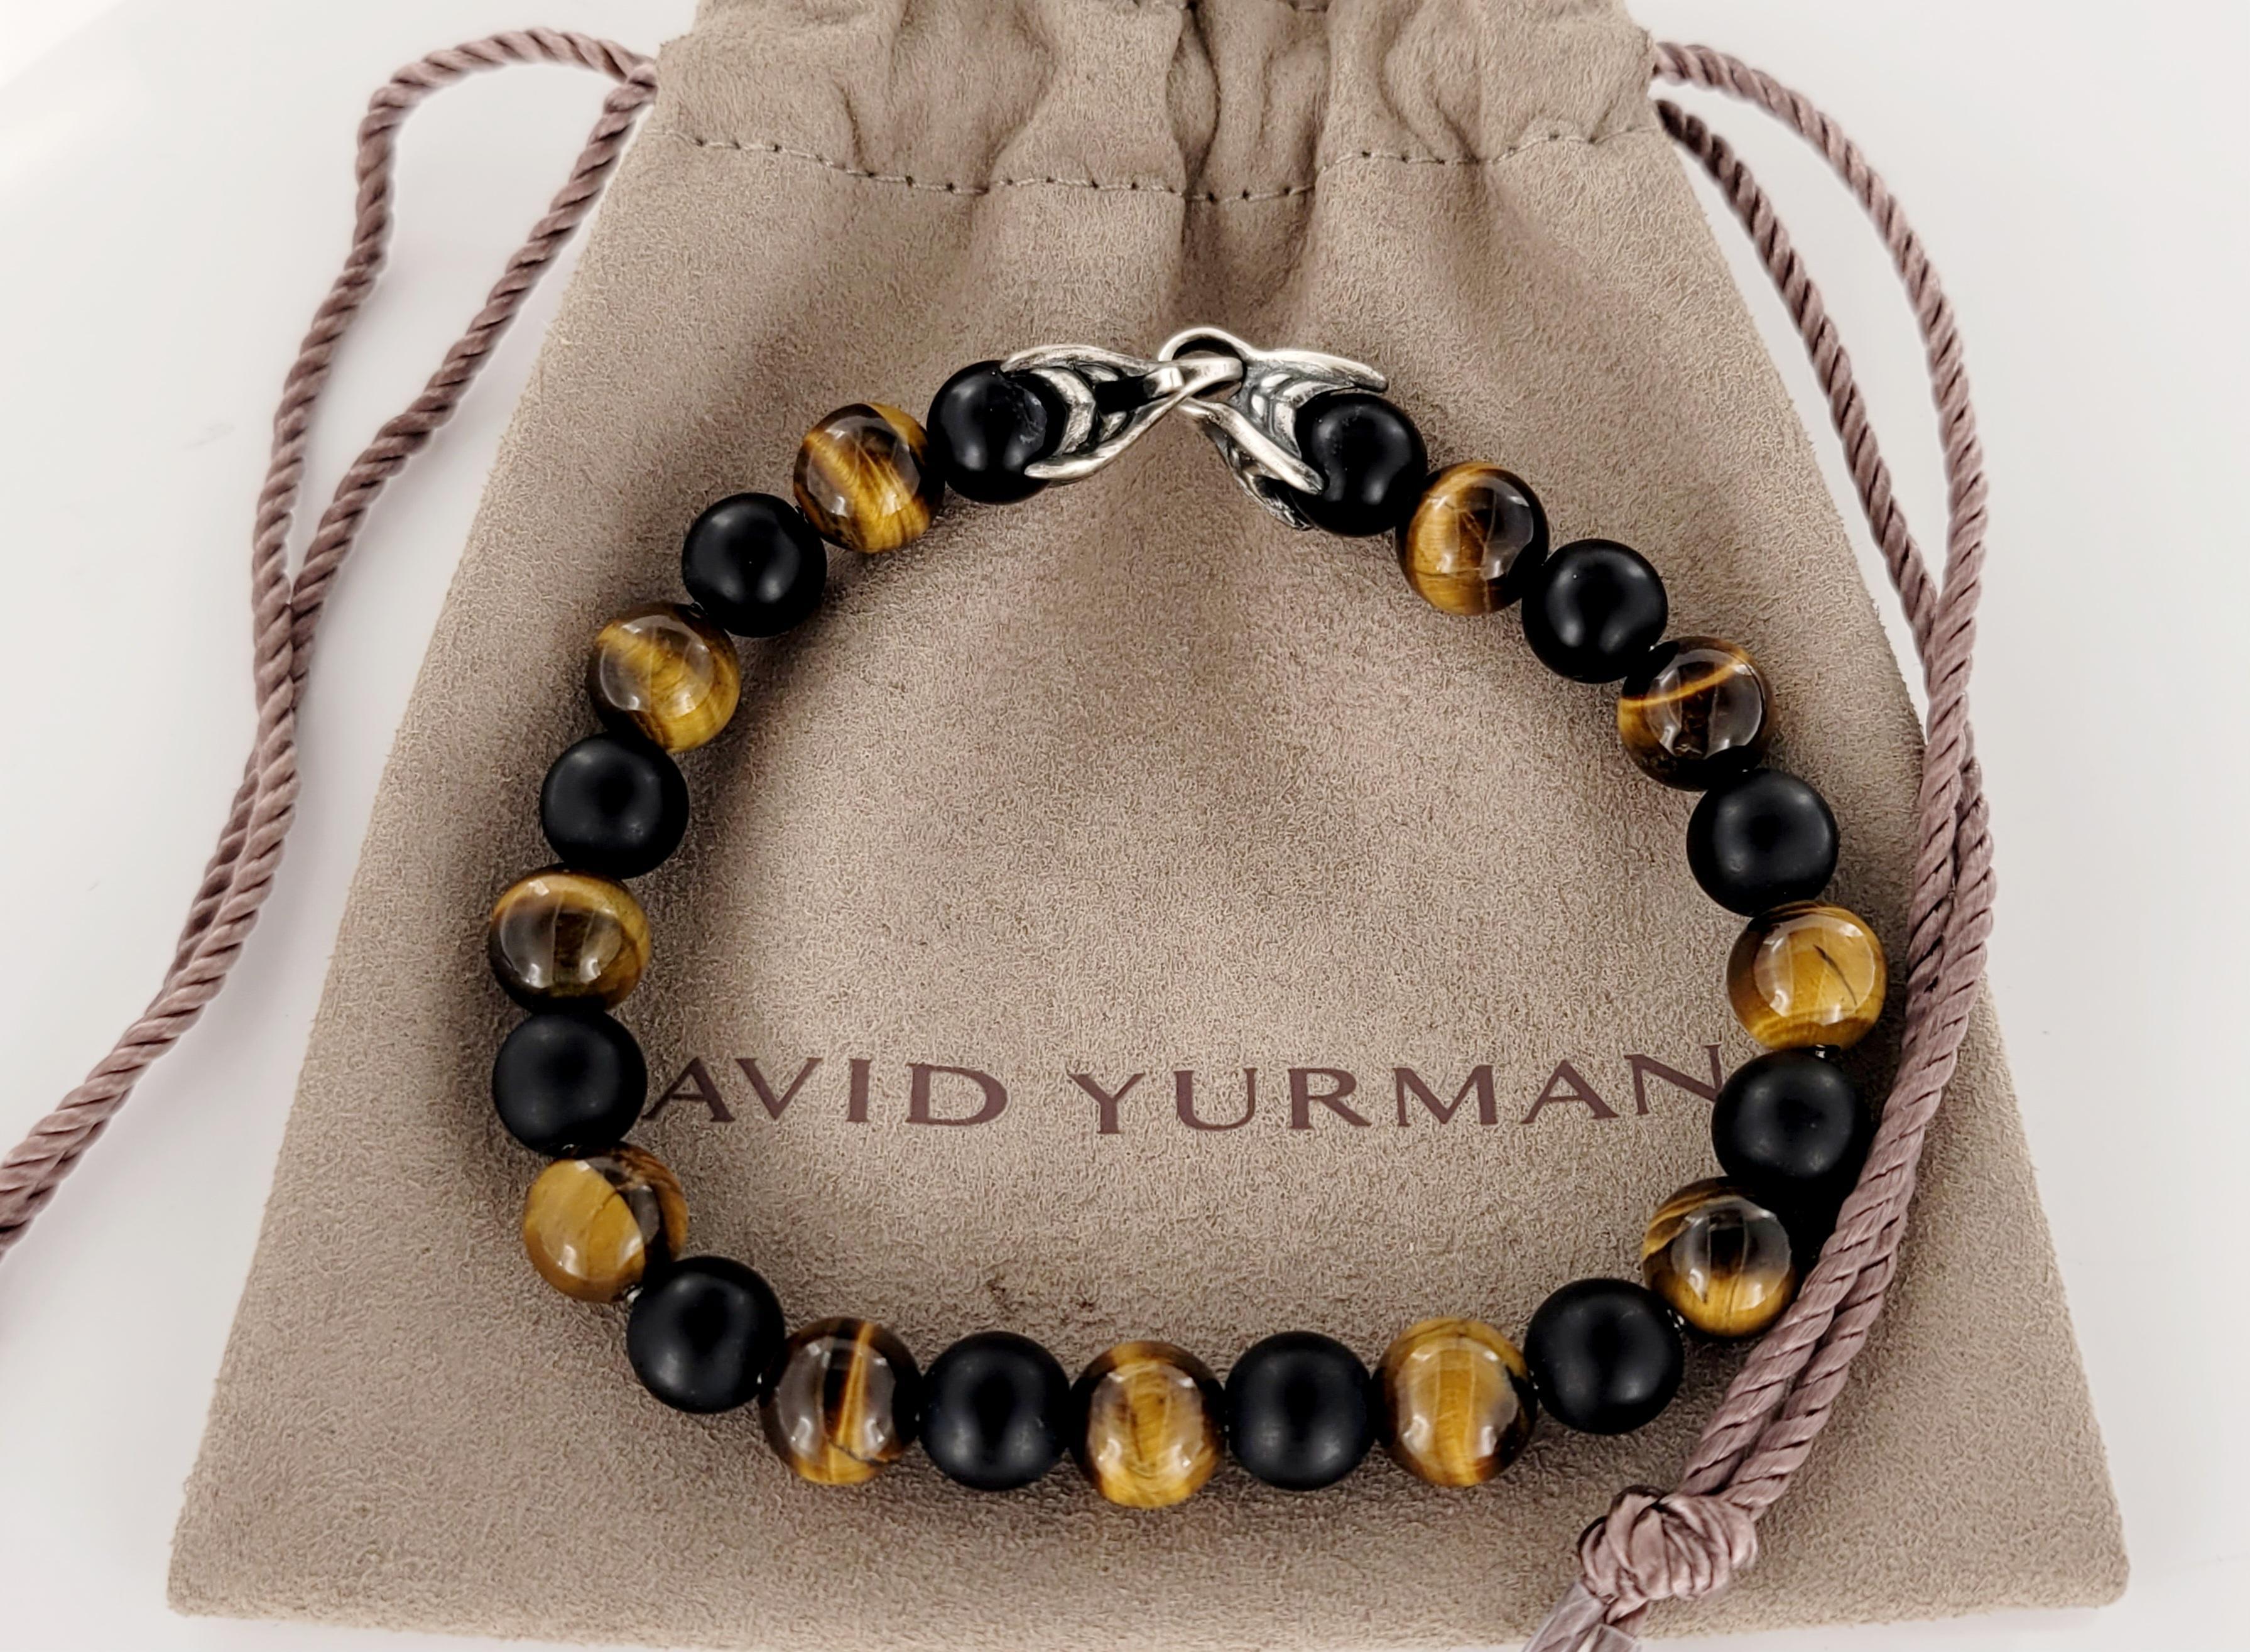 Brand David yurman 
Black & Tiger eye beaded bracelet 
Bracelet Beads 6mm 
Bracelet Length 8'' Long
Condition New, never worn 
Comes with David Yurman pouch